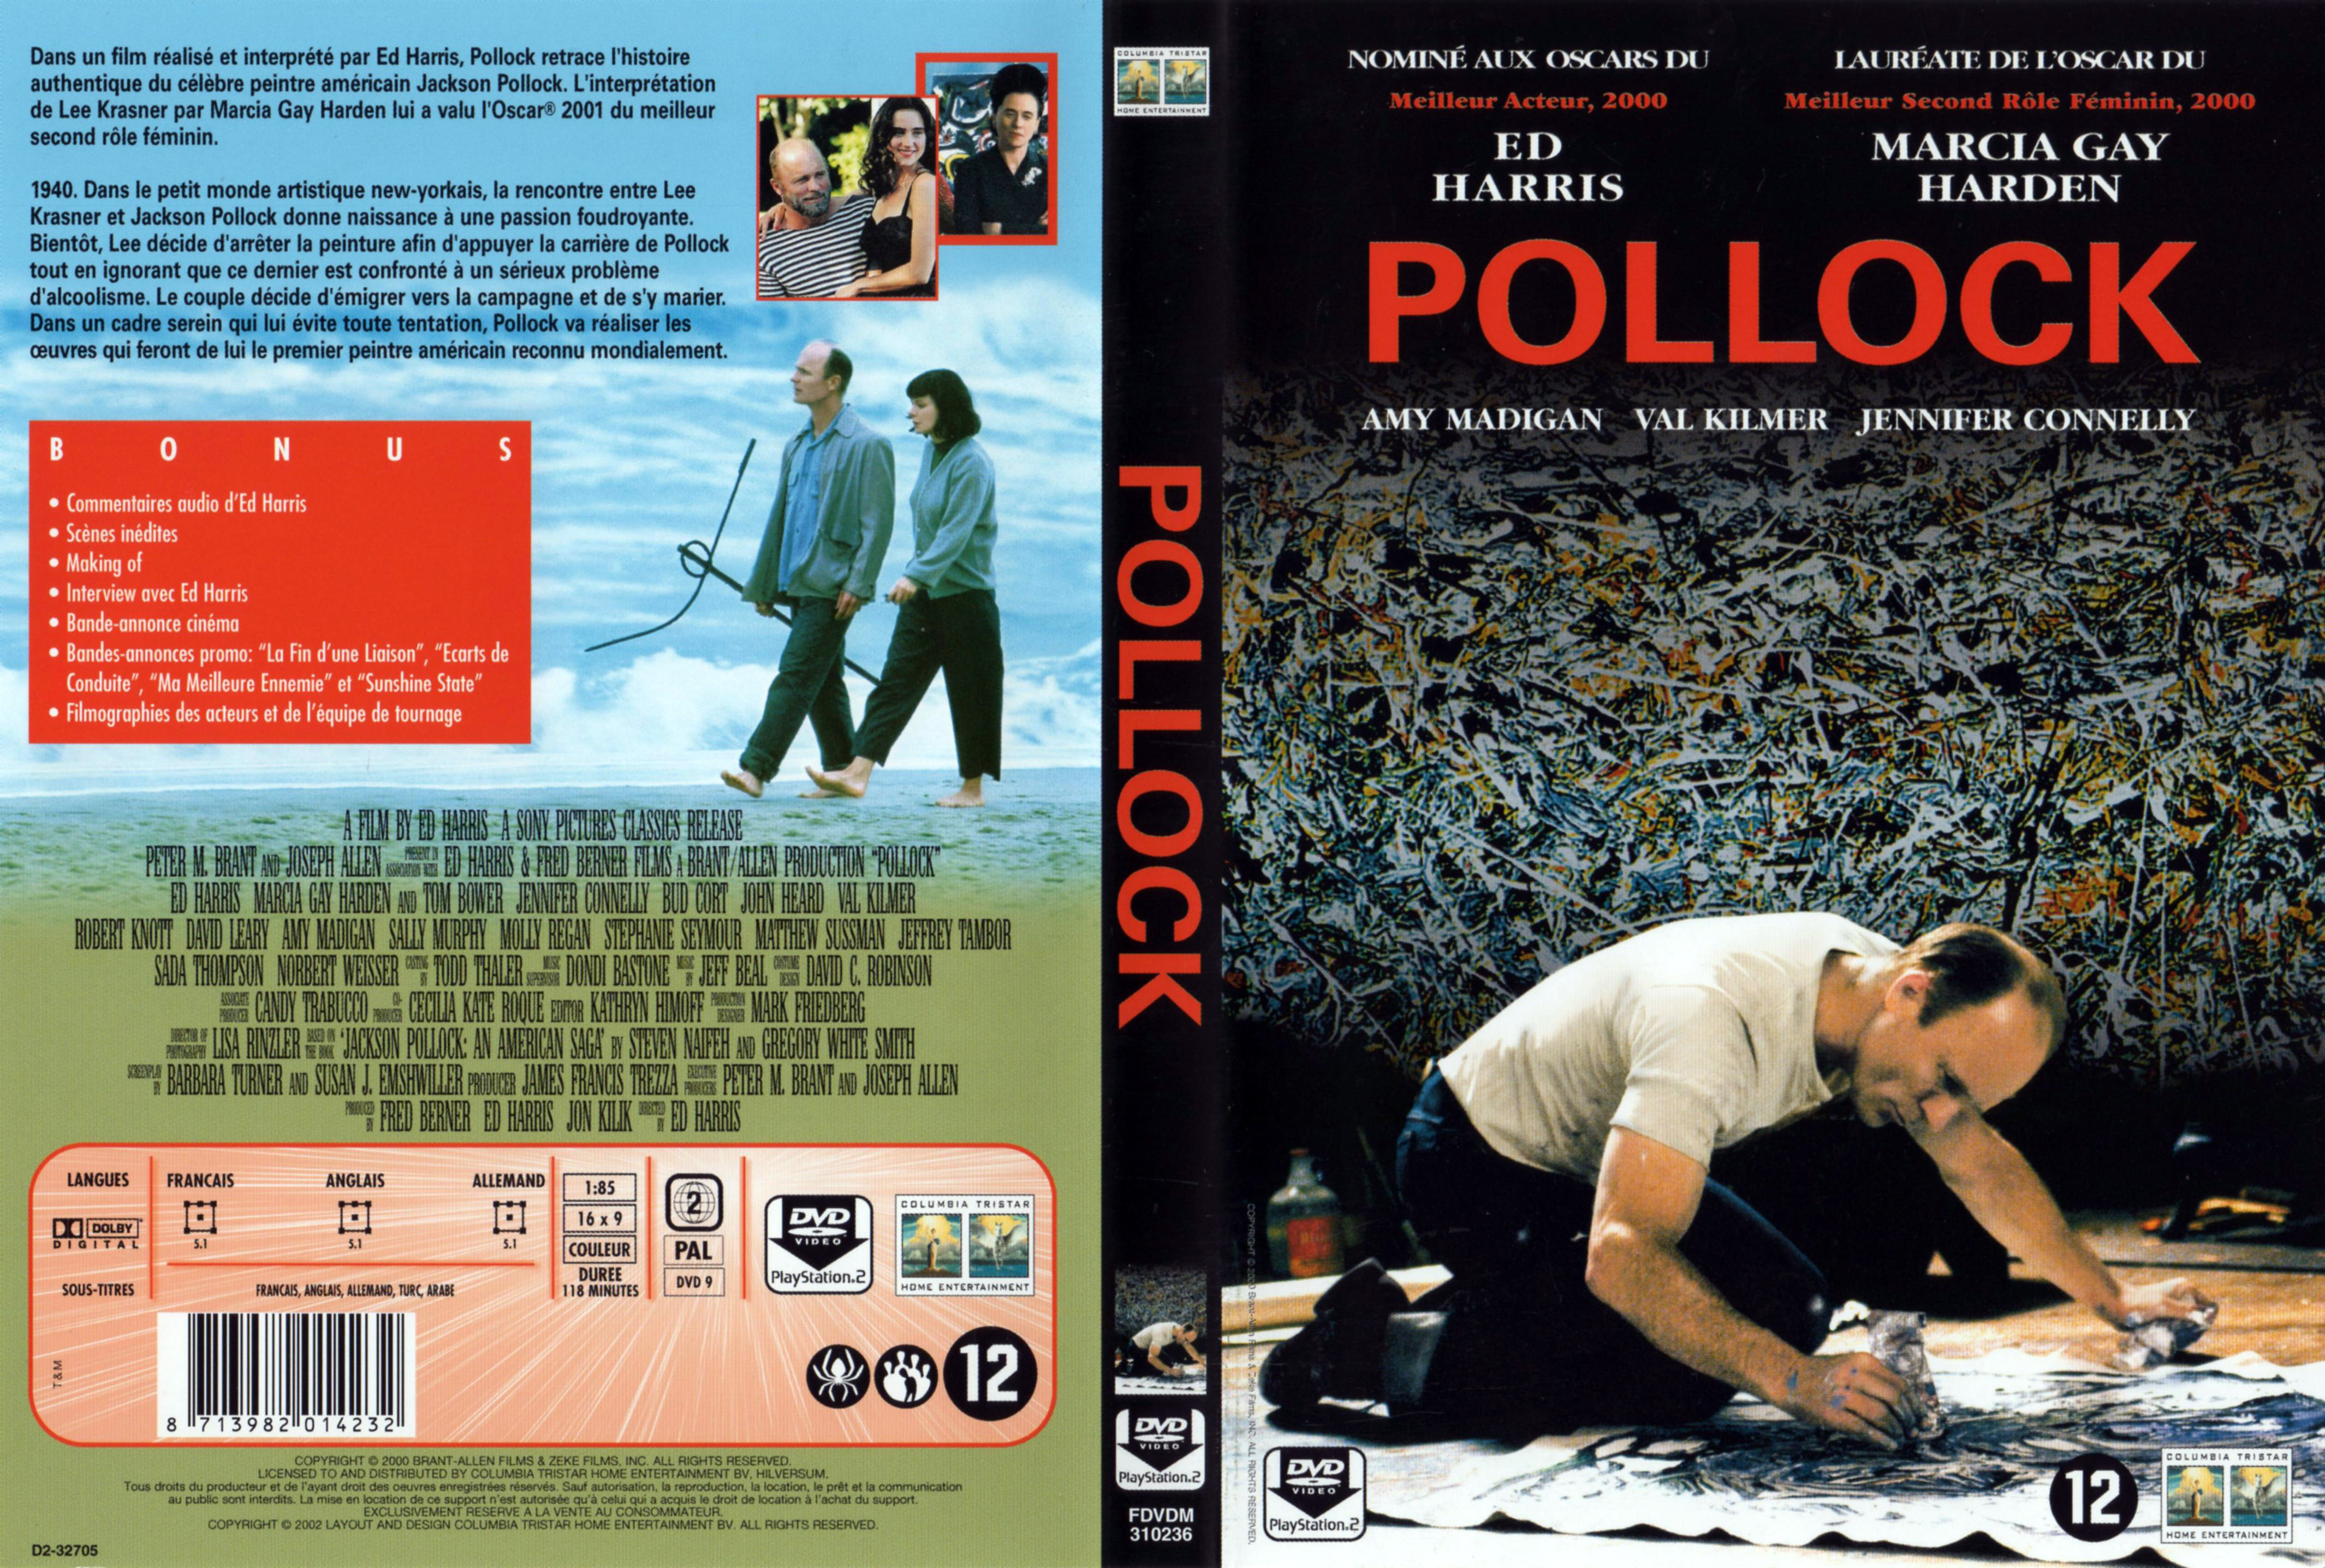 Jaquette DVD Pollock